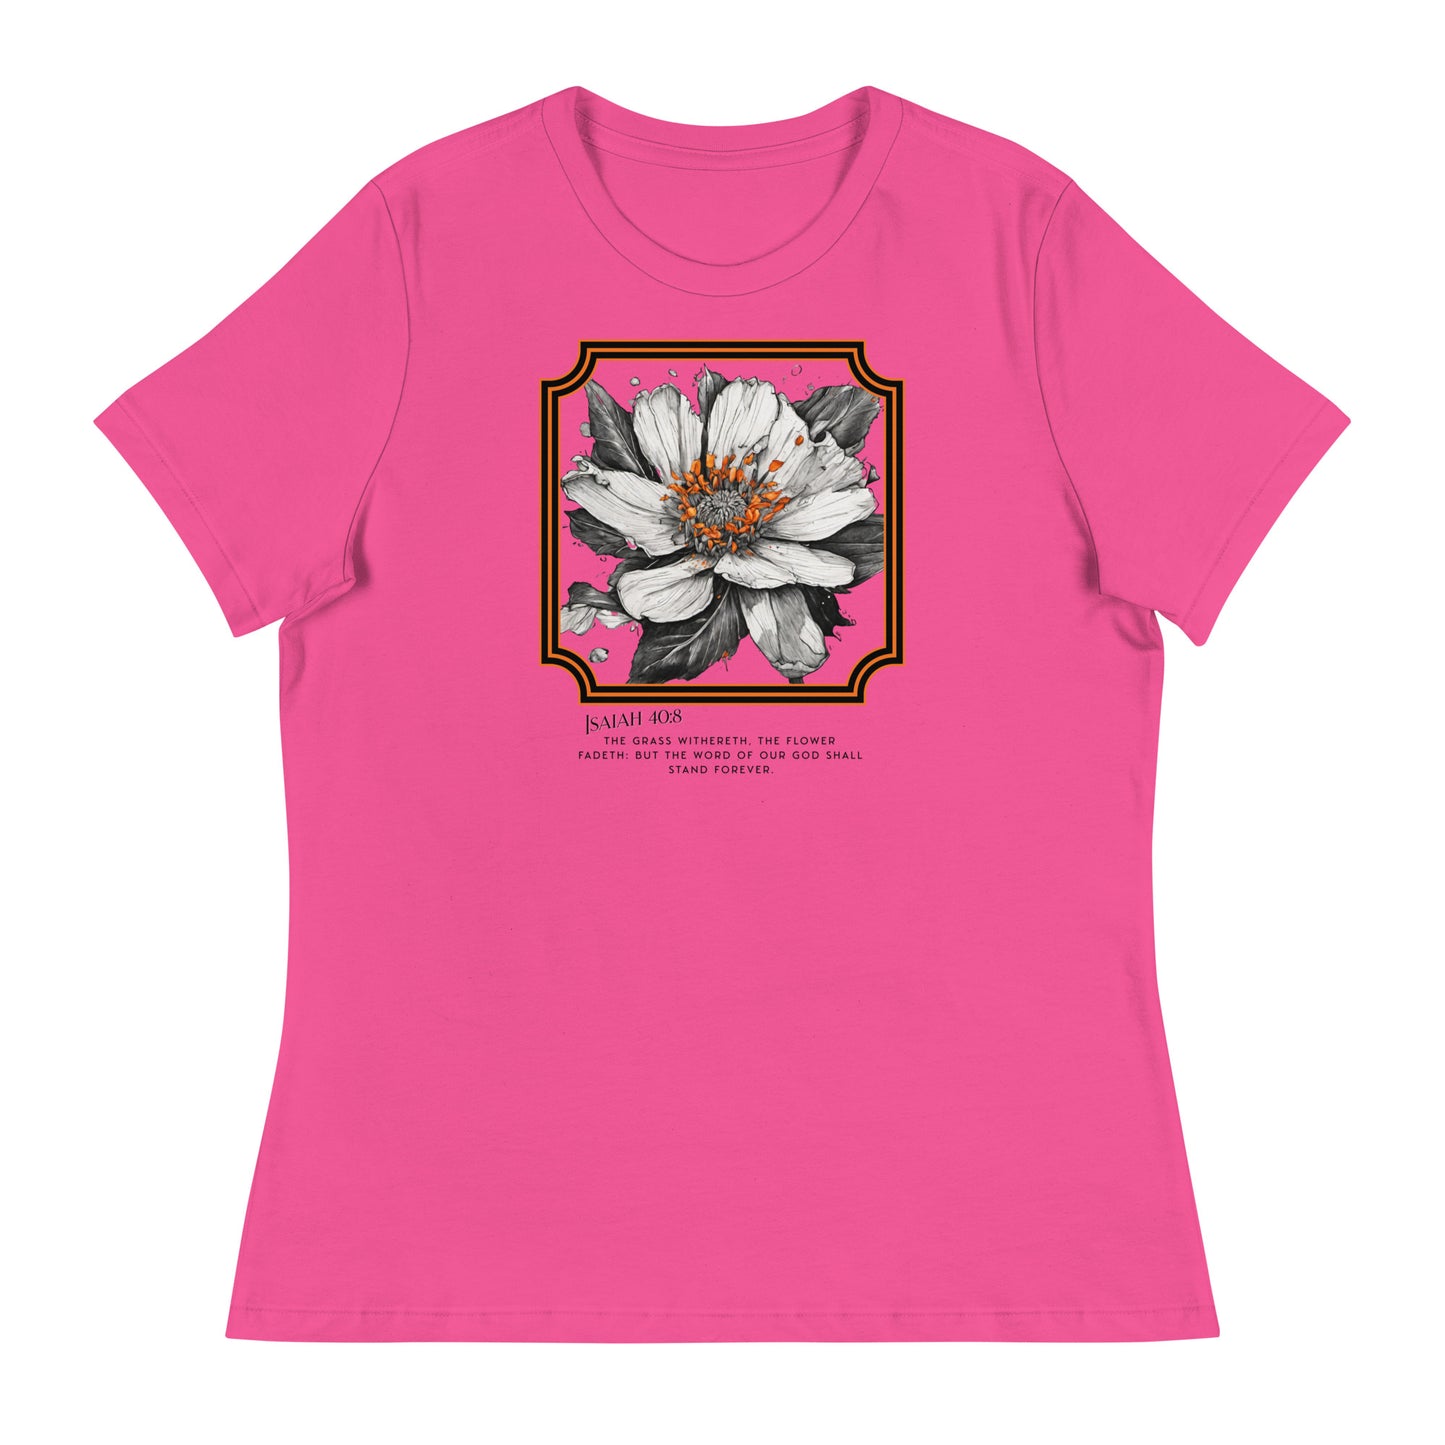 Isaiah 40:8 Flower Fadeth Women's Christian Graphic T-Shirt Berry